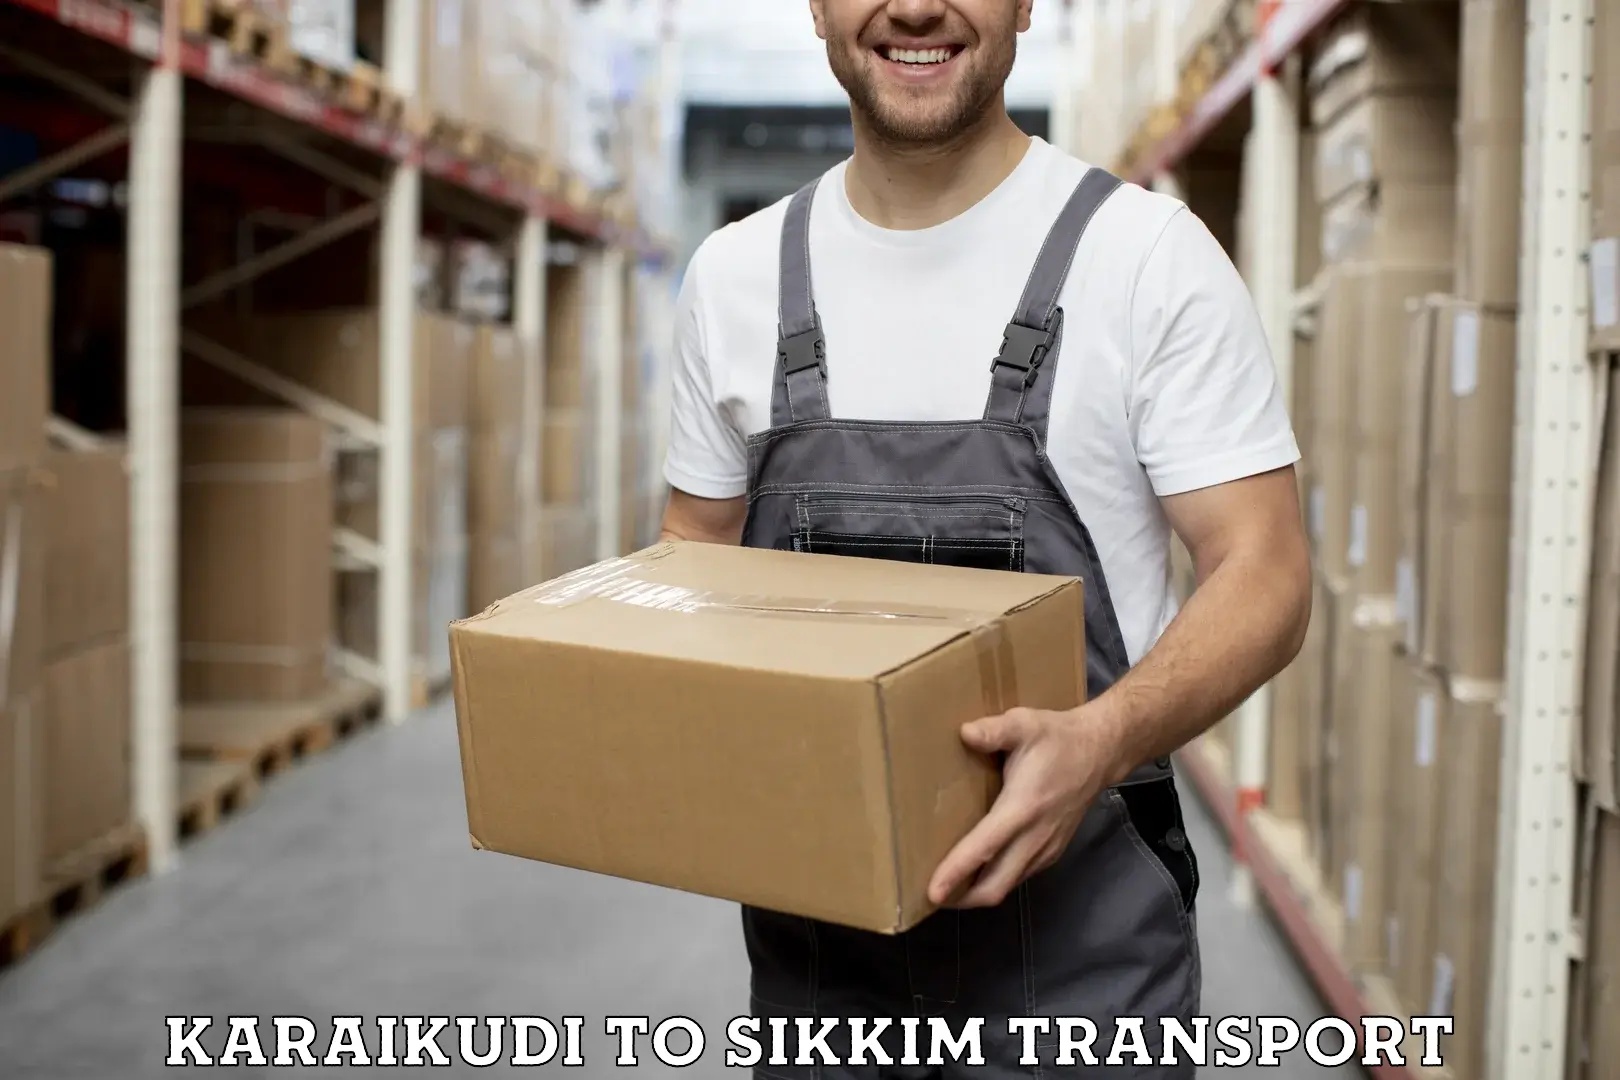 Sending bike to another city Karaikudi to Sikkim